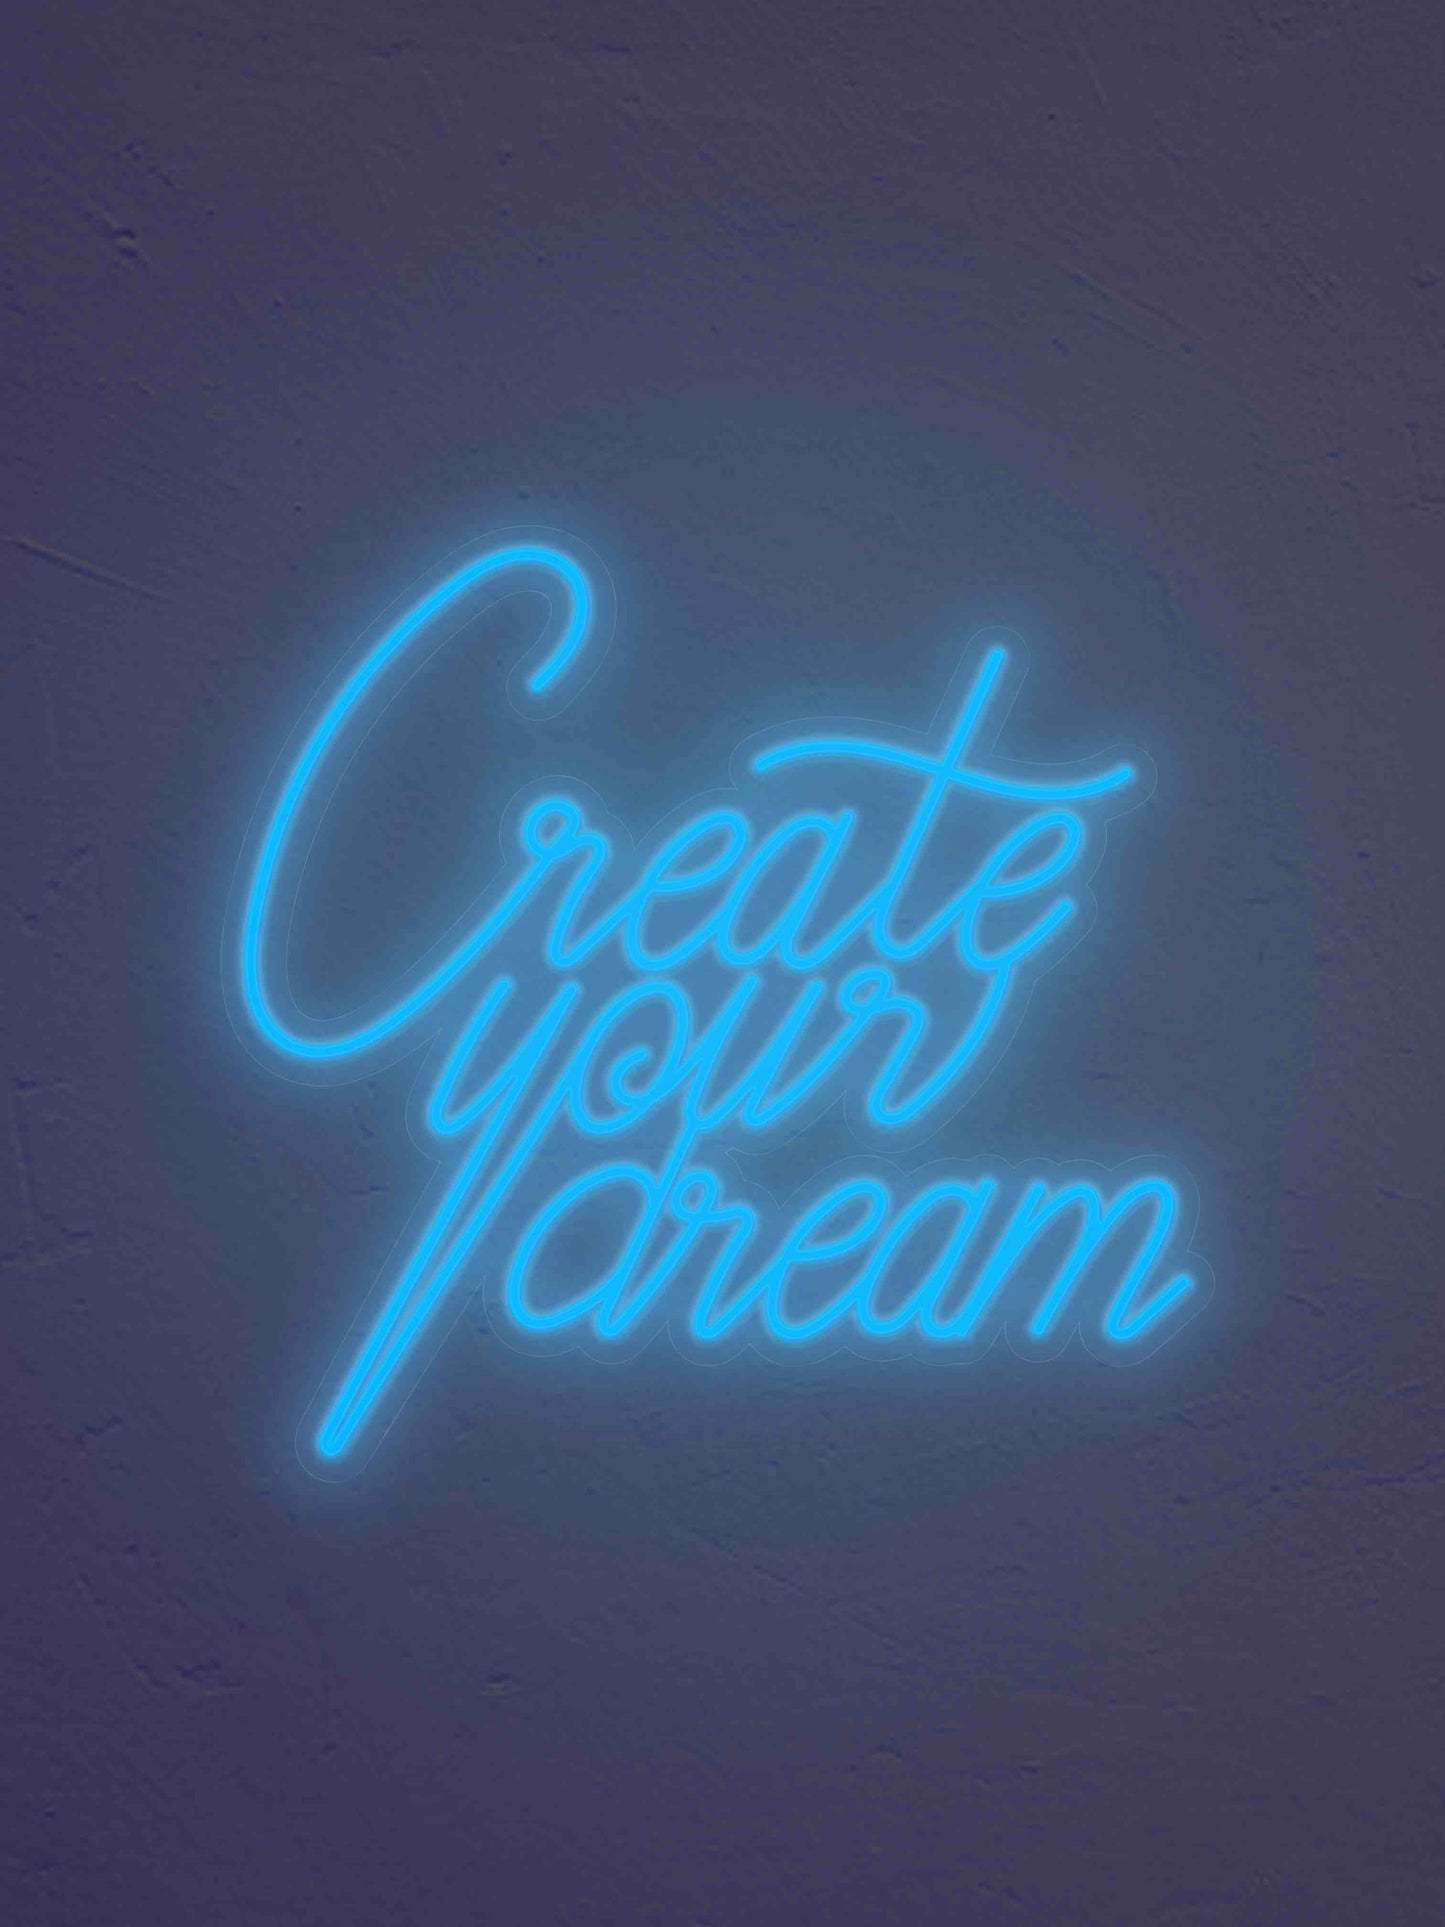 Create Your Dream